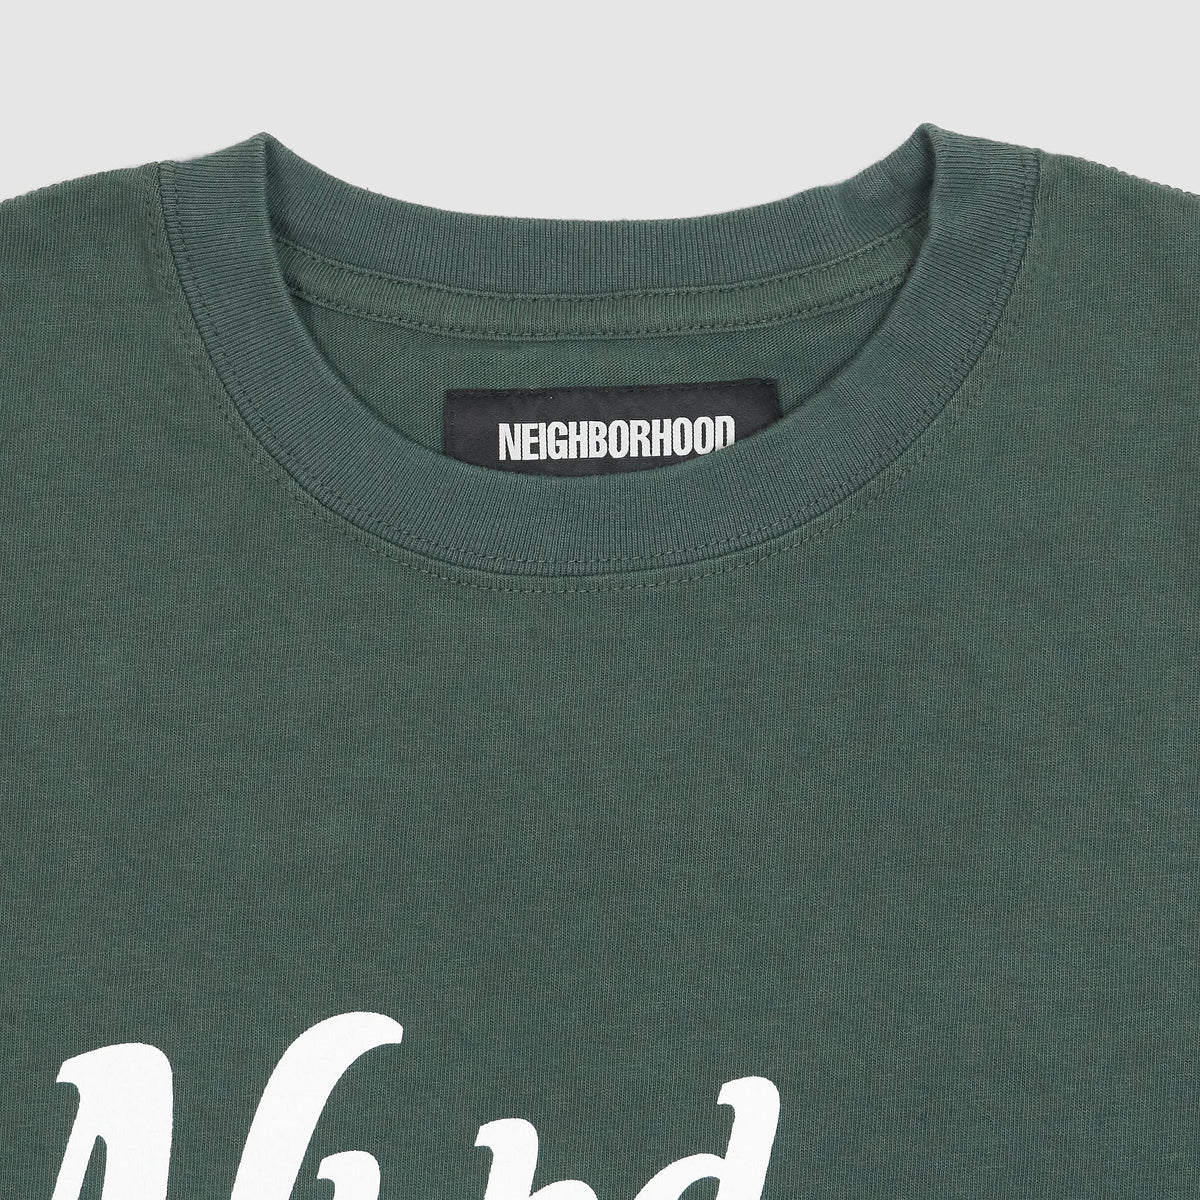 Neighborhood Originals NBHD Squad  Crew Neck T-Shirt